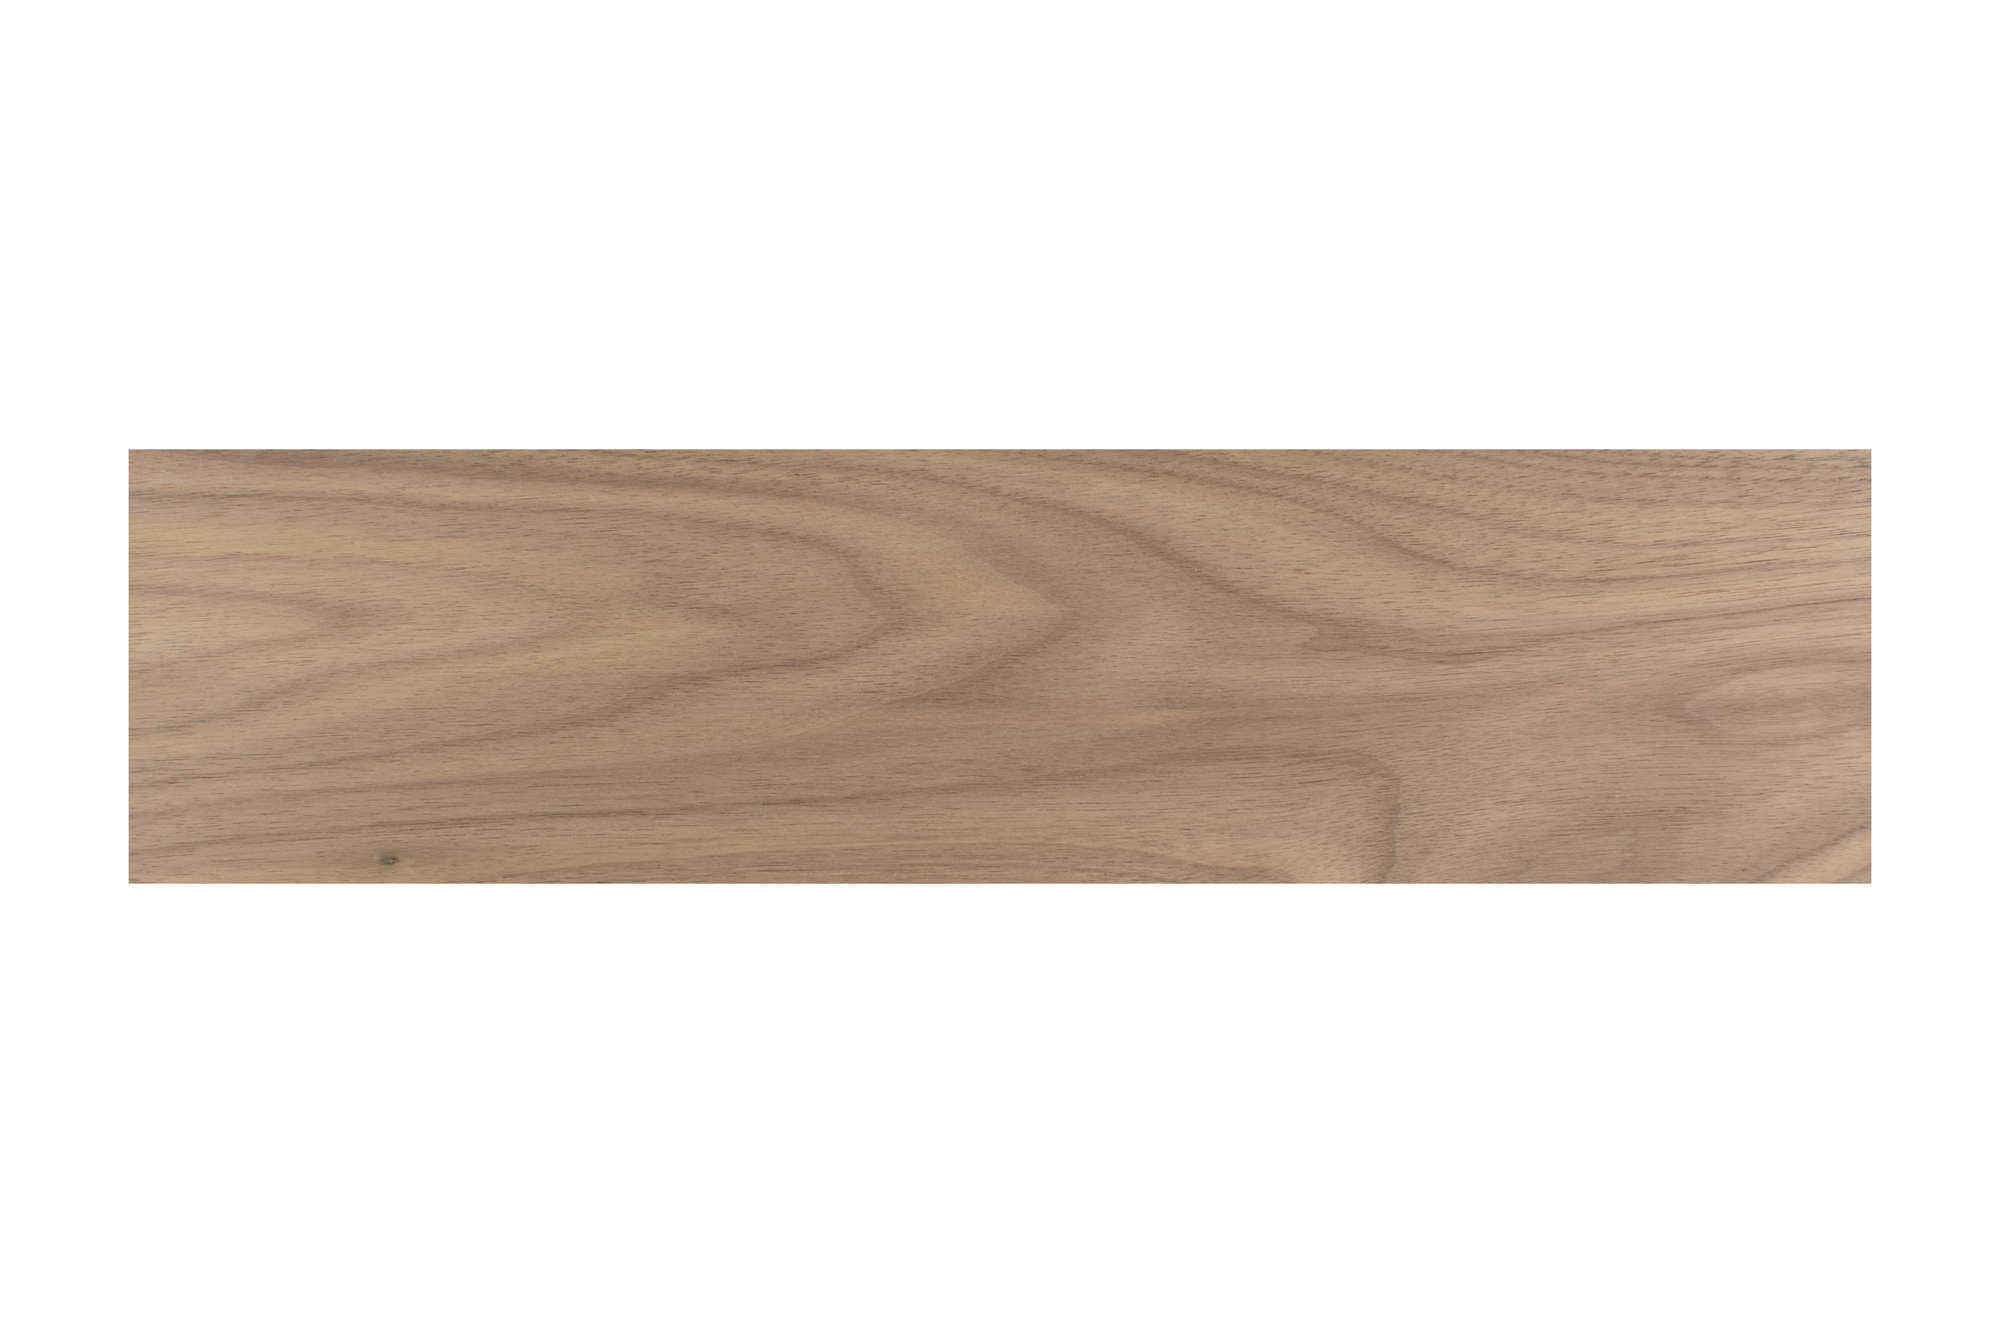 Walnut Wood craft board 1/8 inch thick